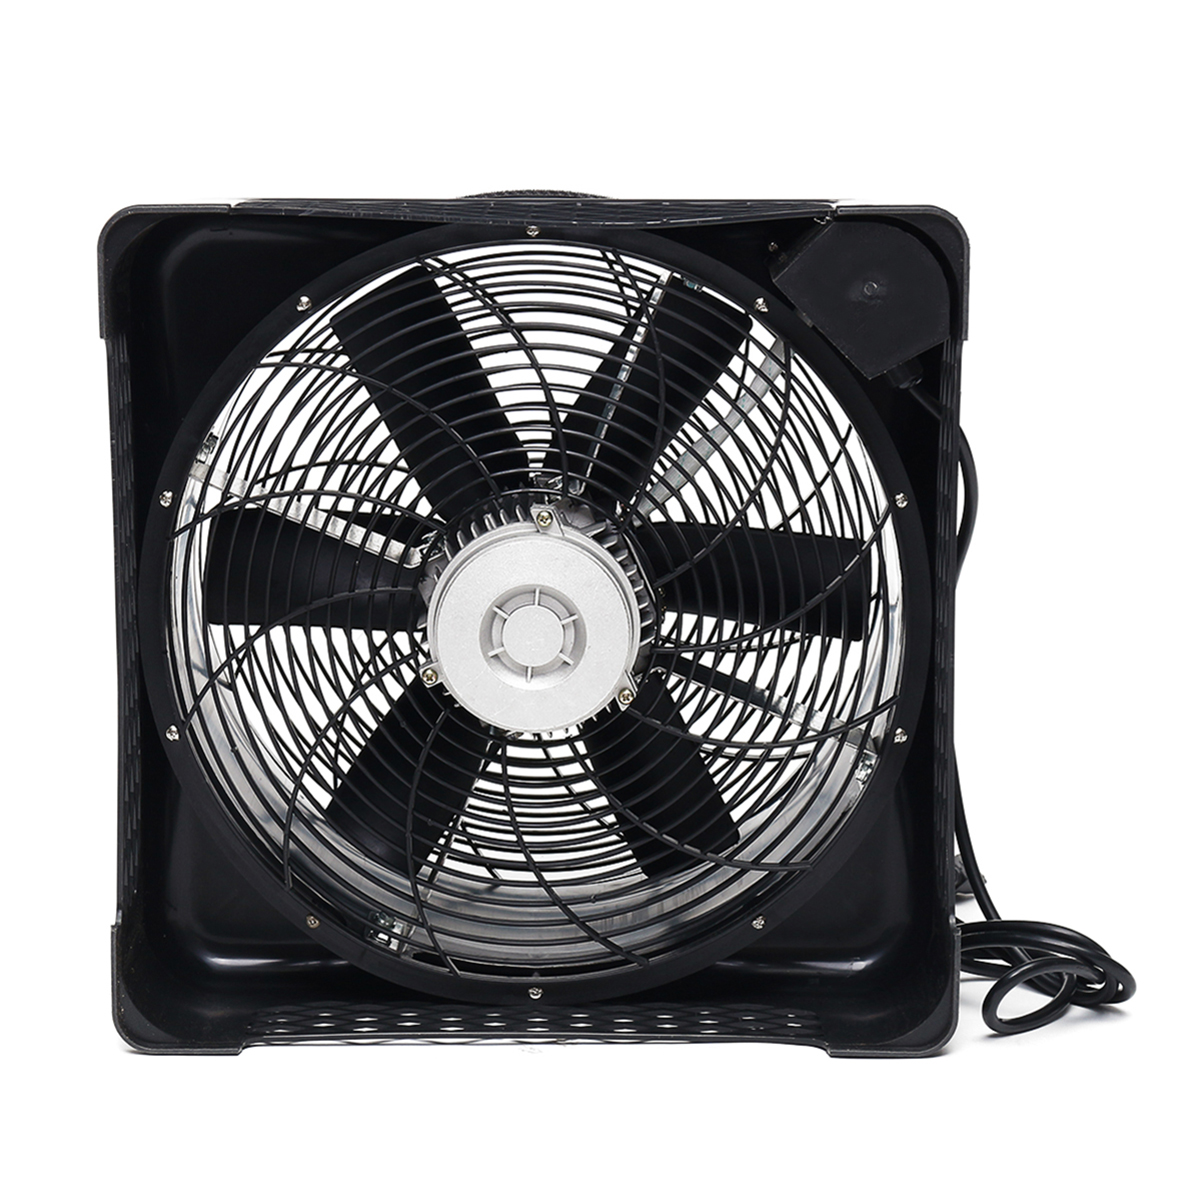 

110v 370w мини 45см охлаждающий вентилятор с низким уровнем шума для домашнего туризма